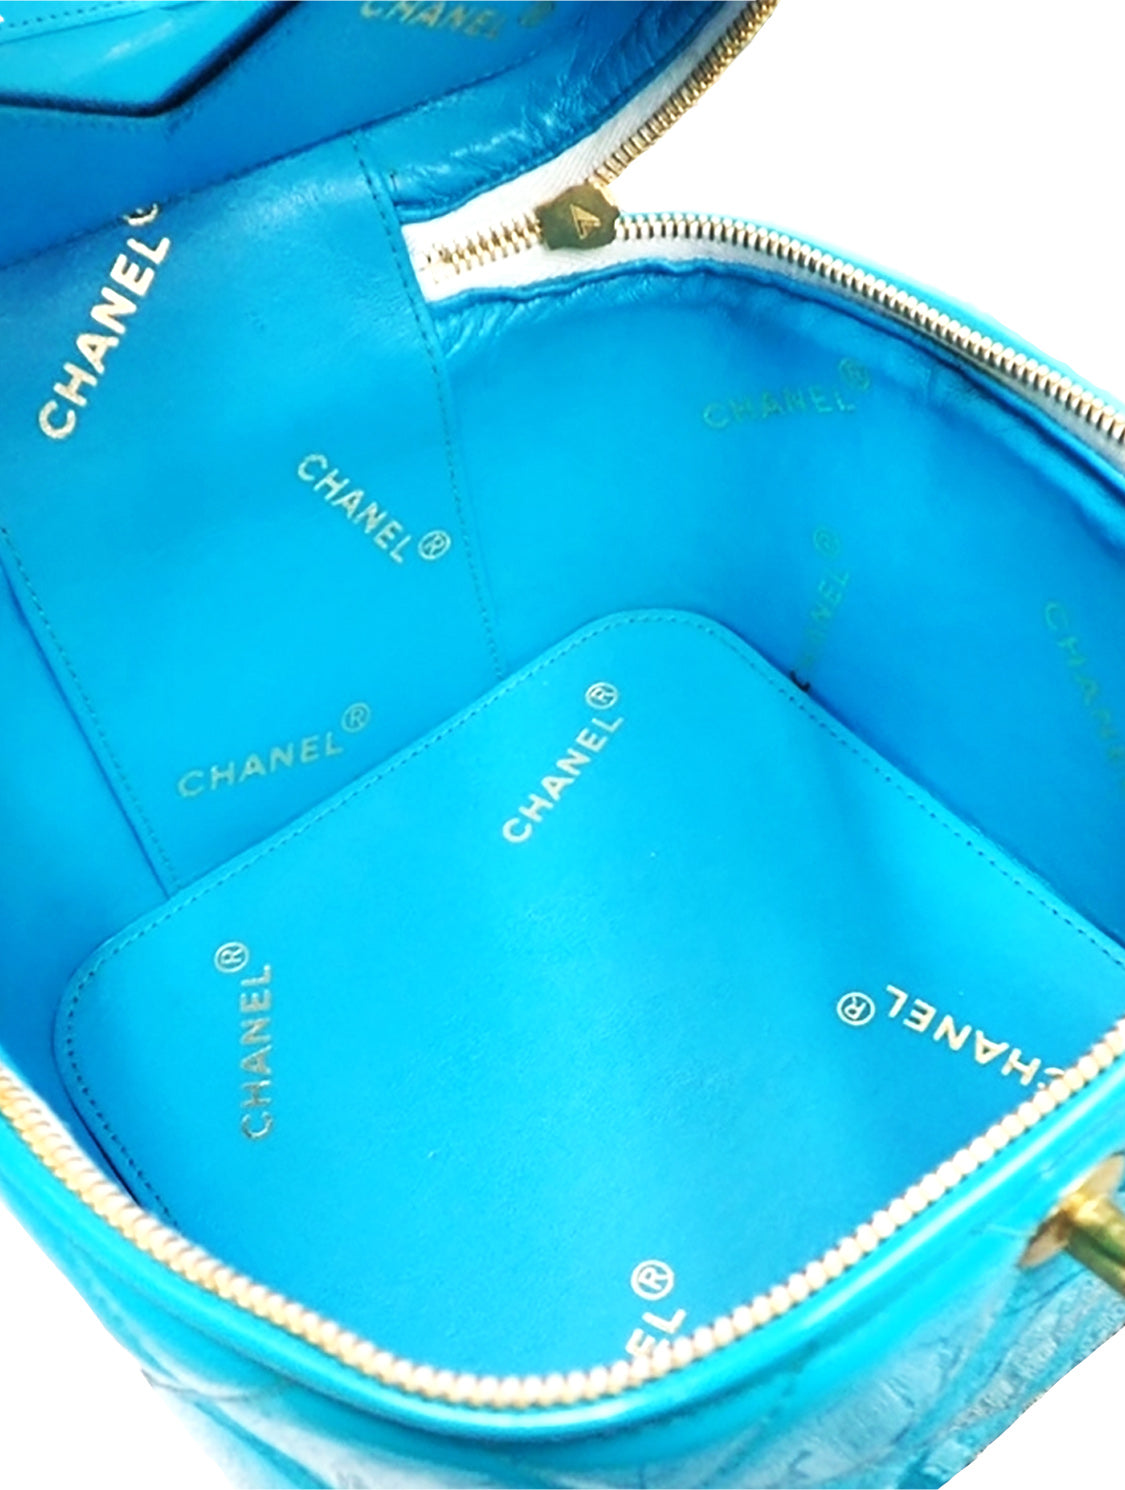 chanel vanity bag blue